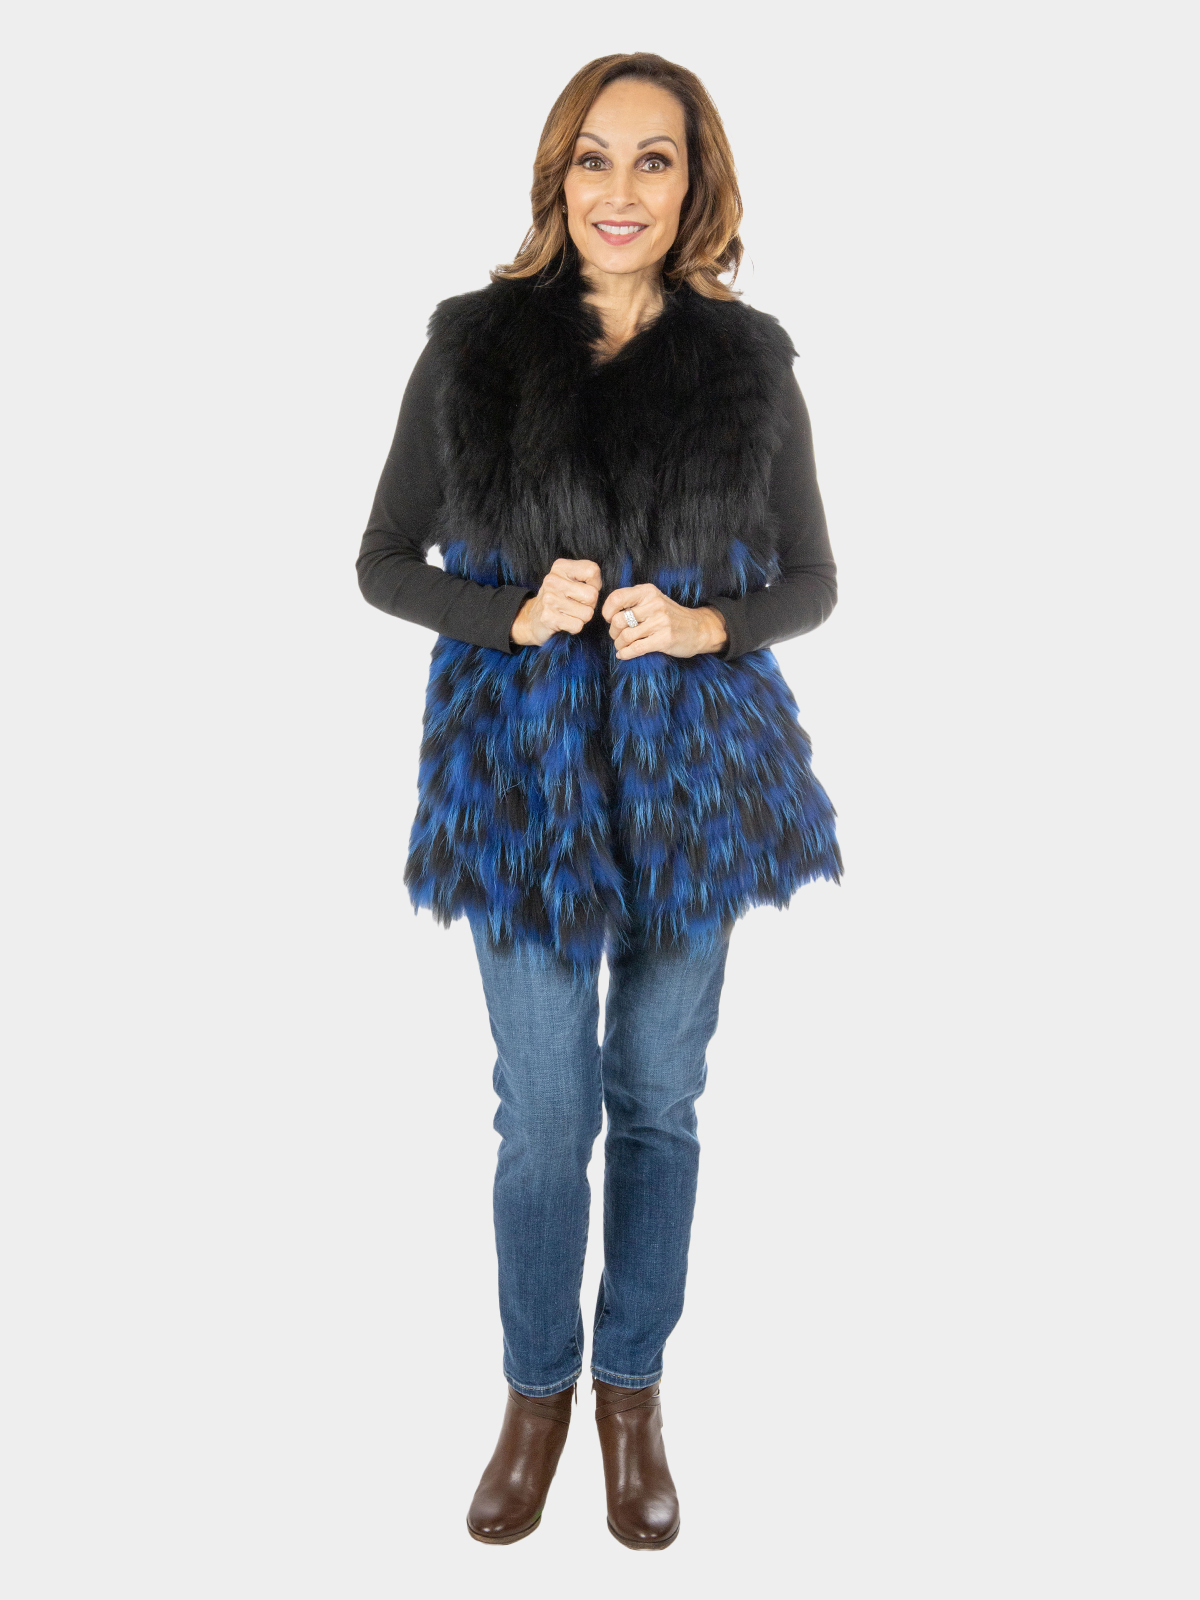 Blue Fox Fur Jacket (Women's Small) - Estate Furs